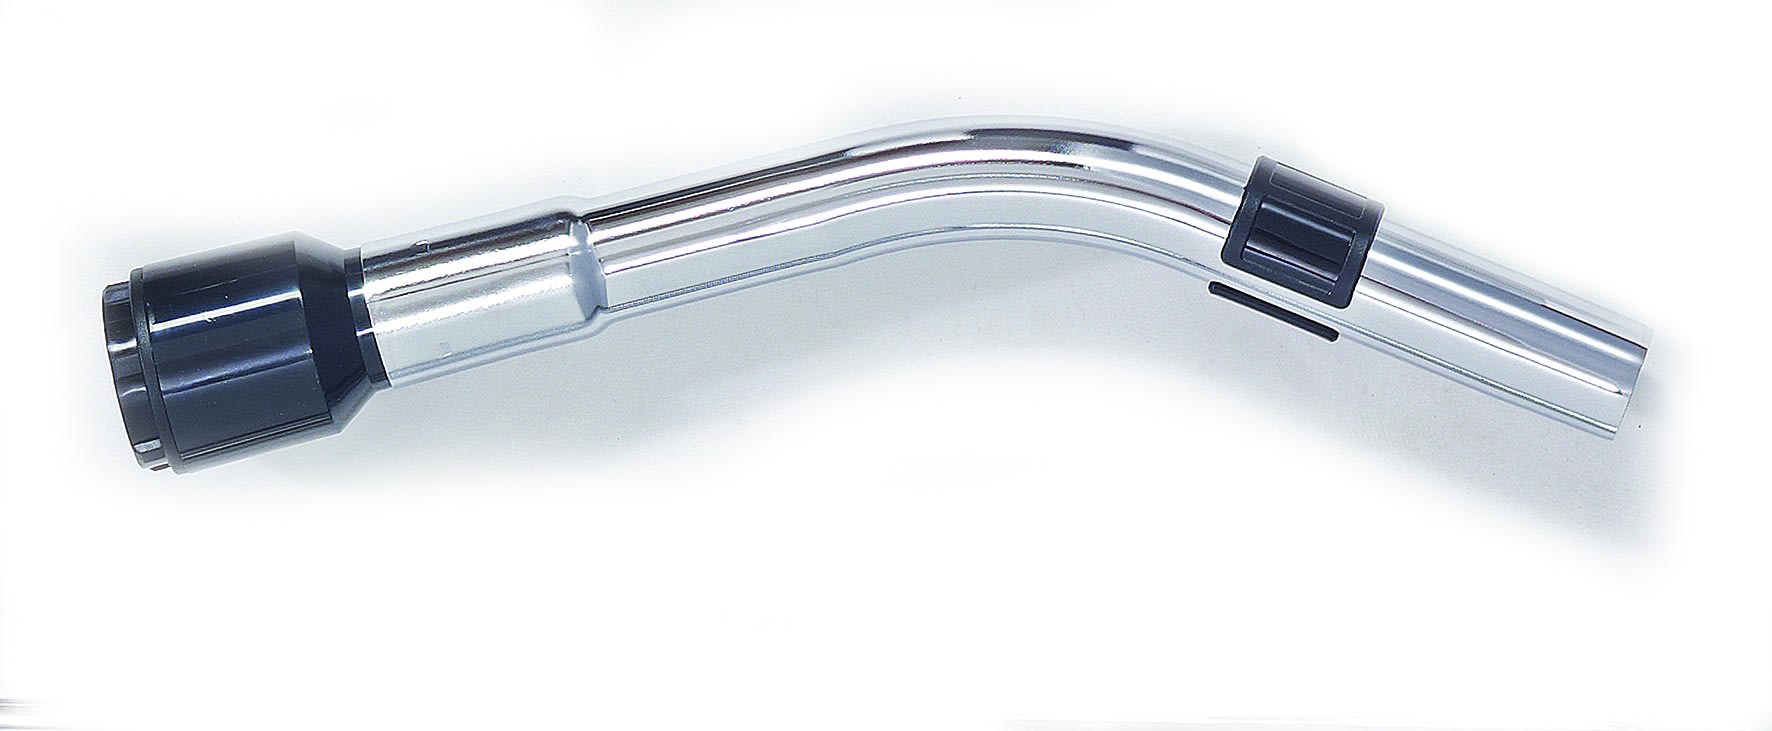 VCI - Poignee coudee en metal pour flexible standard